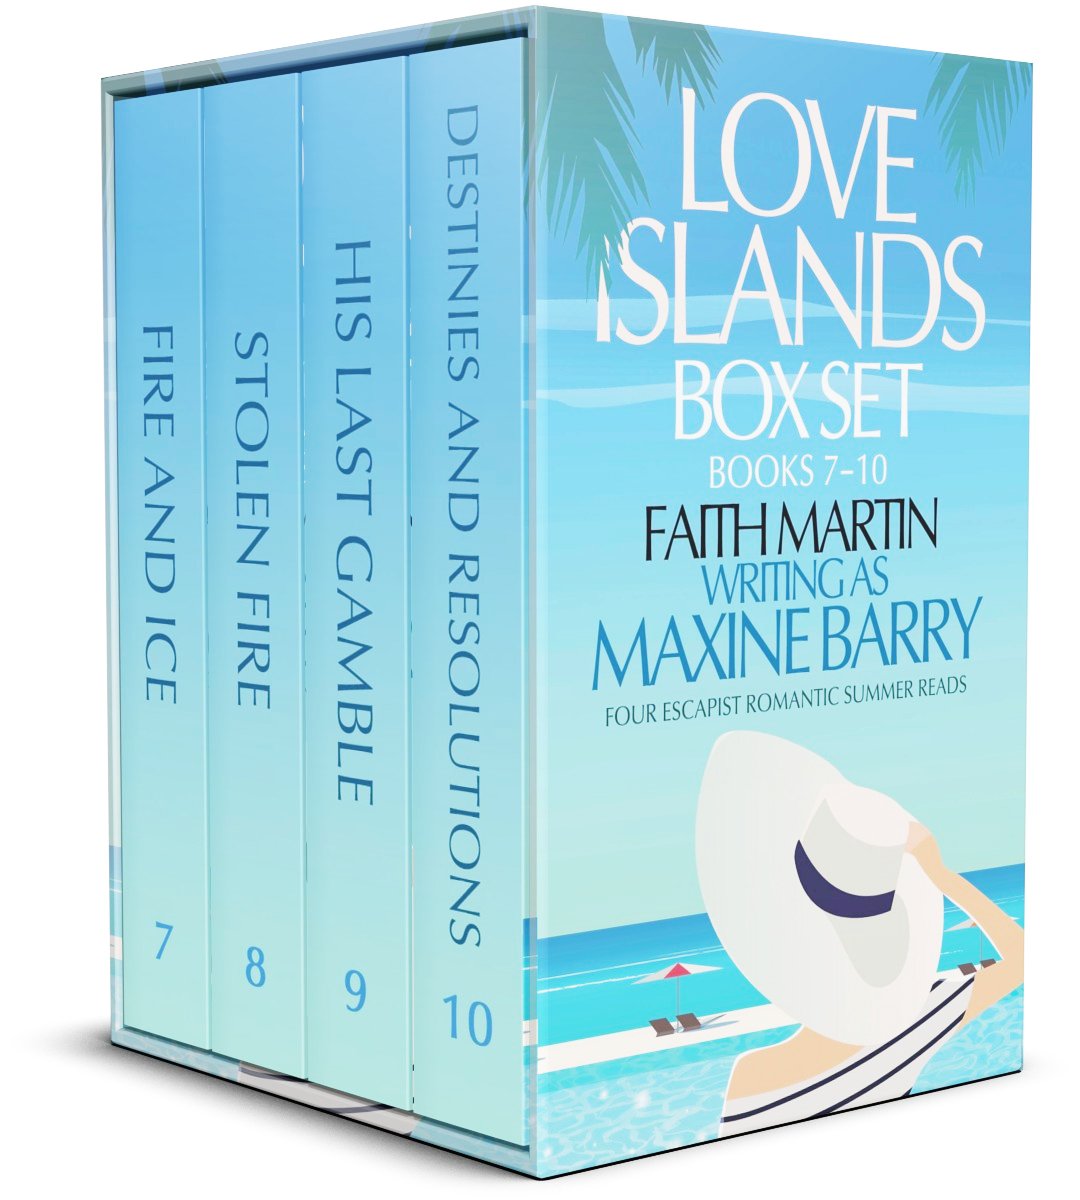 LOVE ISLANDS BOX SET 7-10 cover publish.jpg